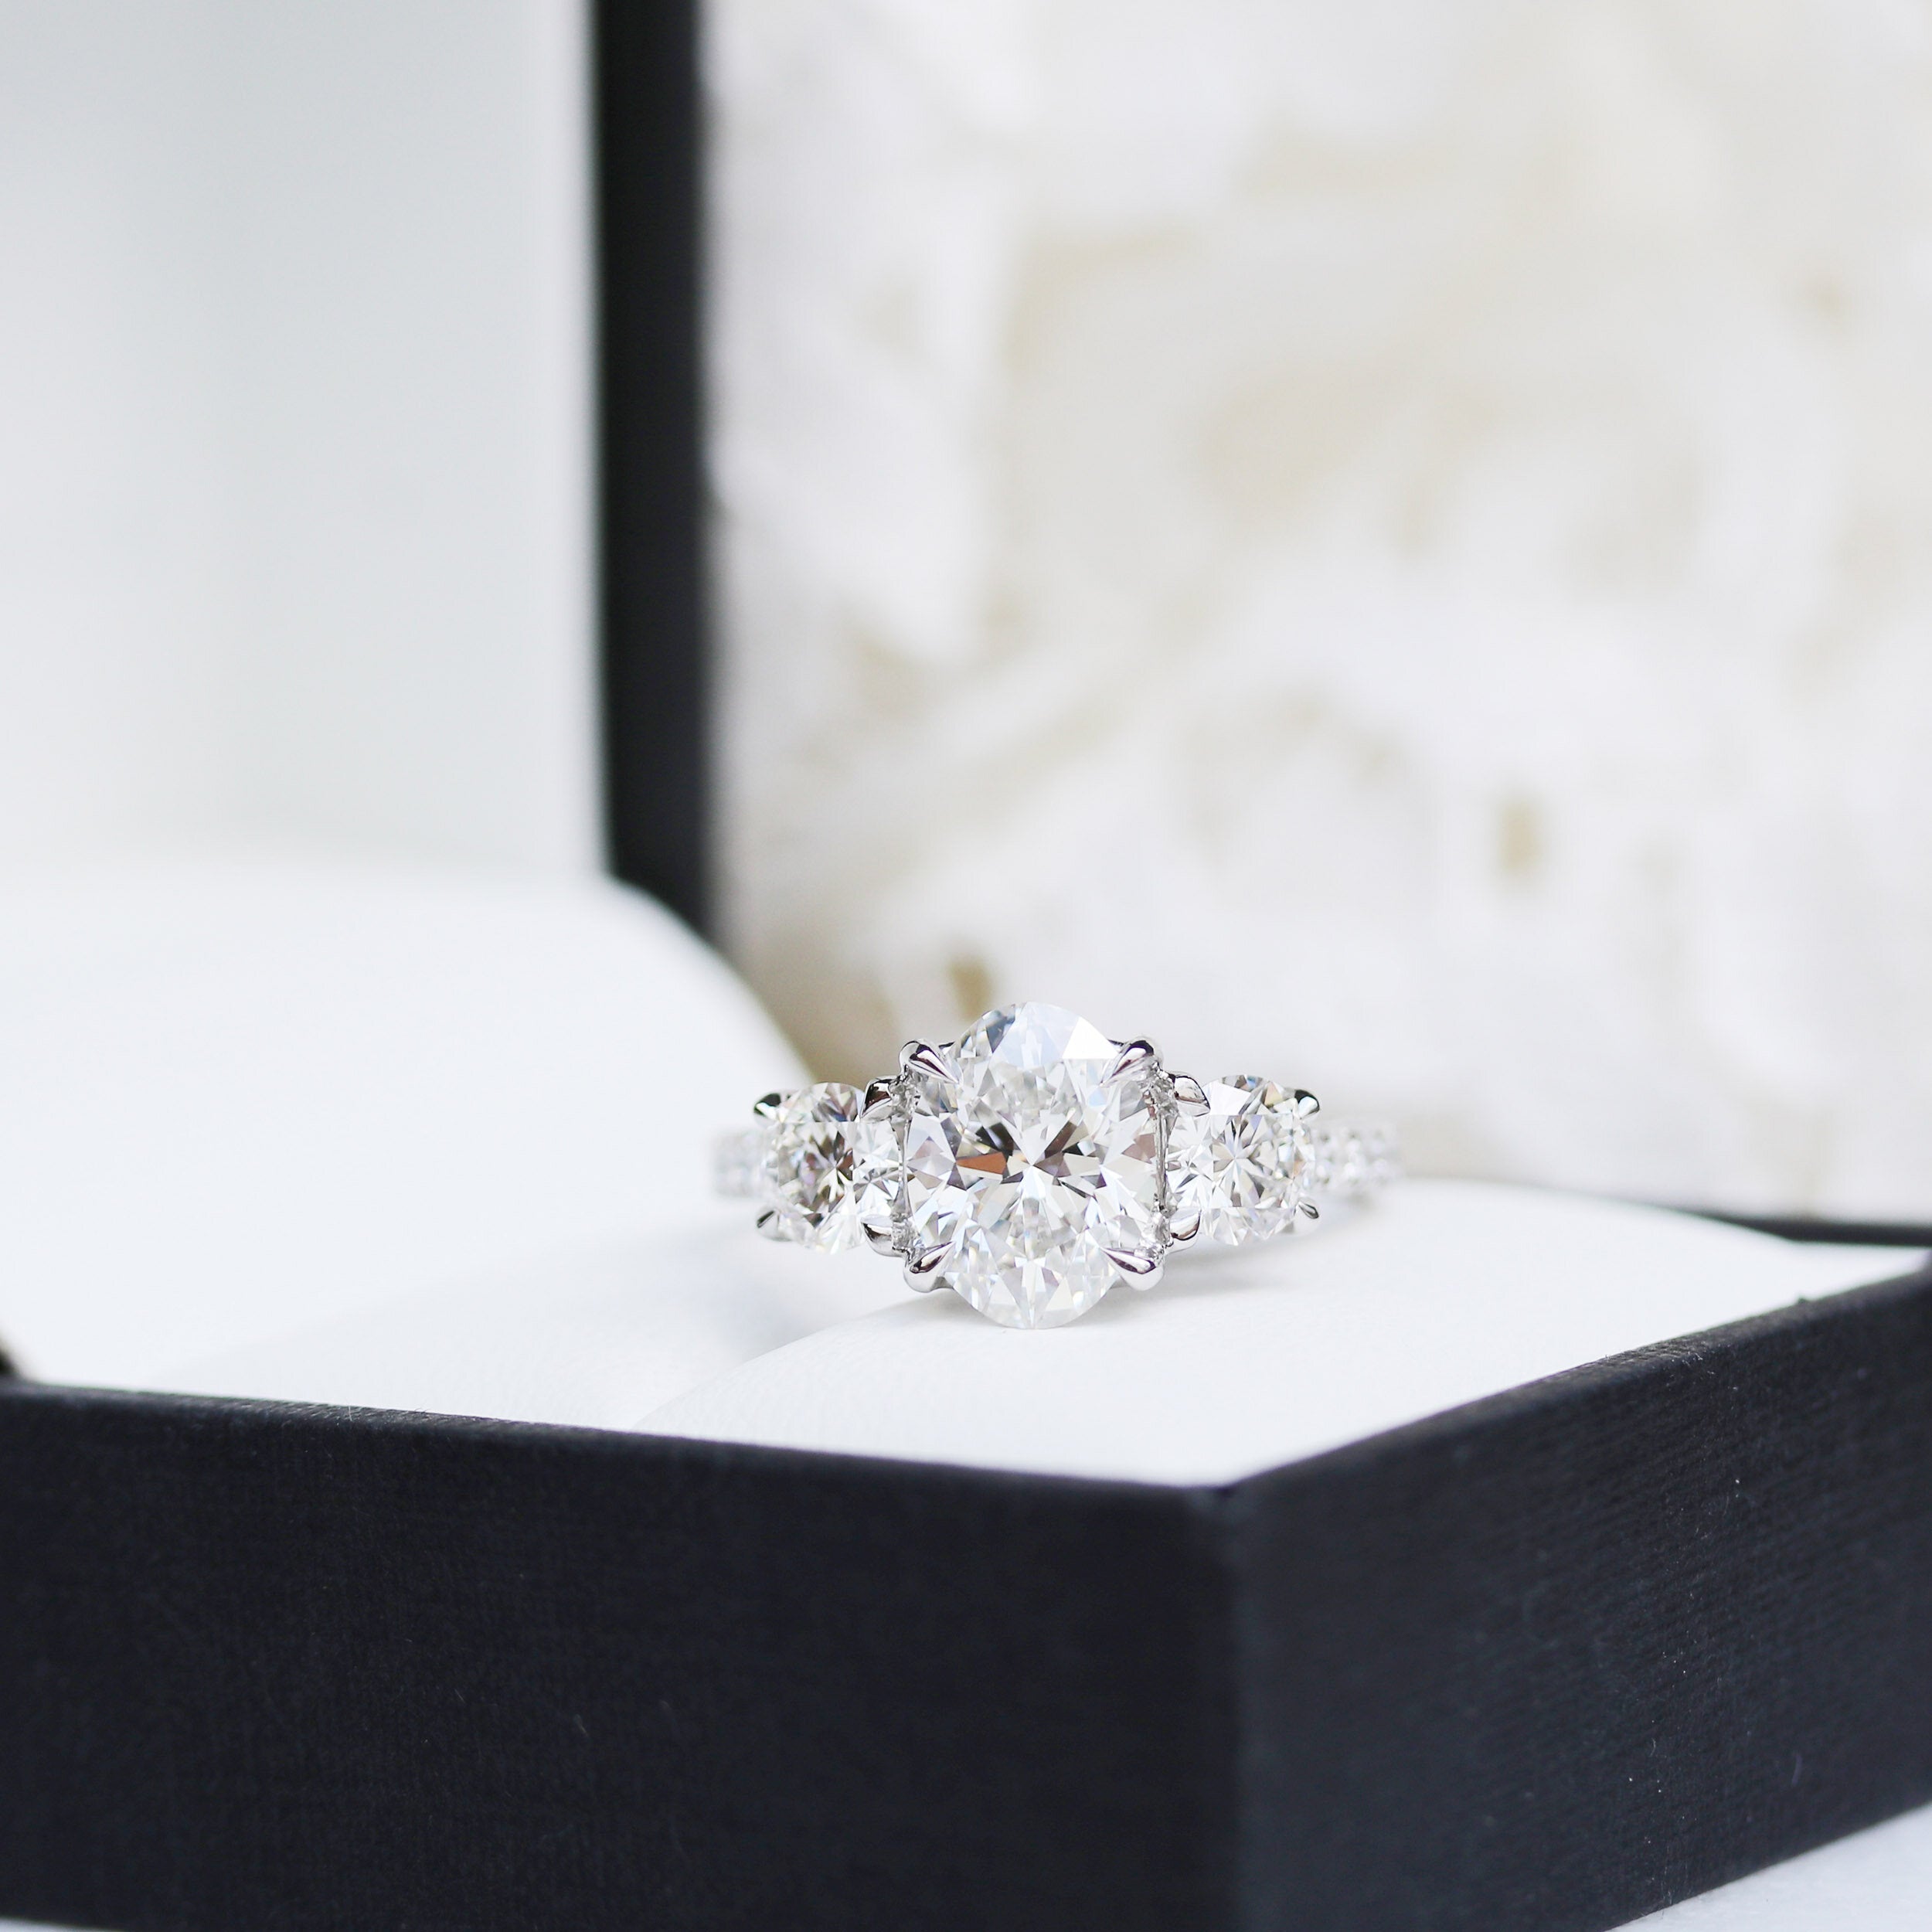 Presentable Oval Shape Diamond Wedding Ring